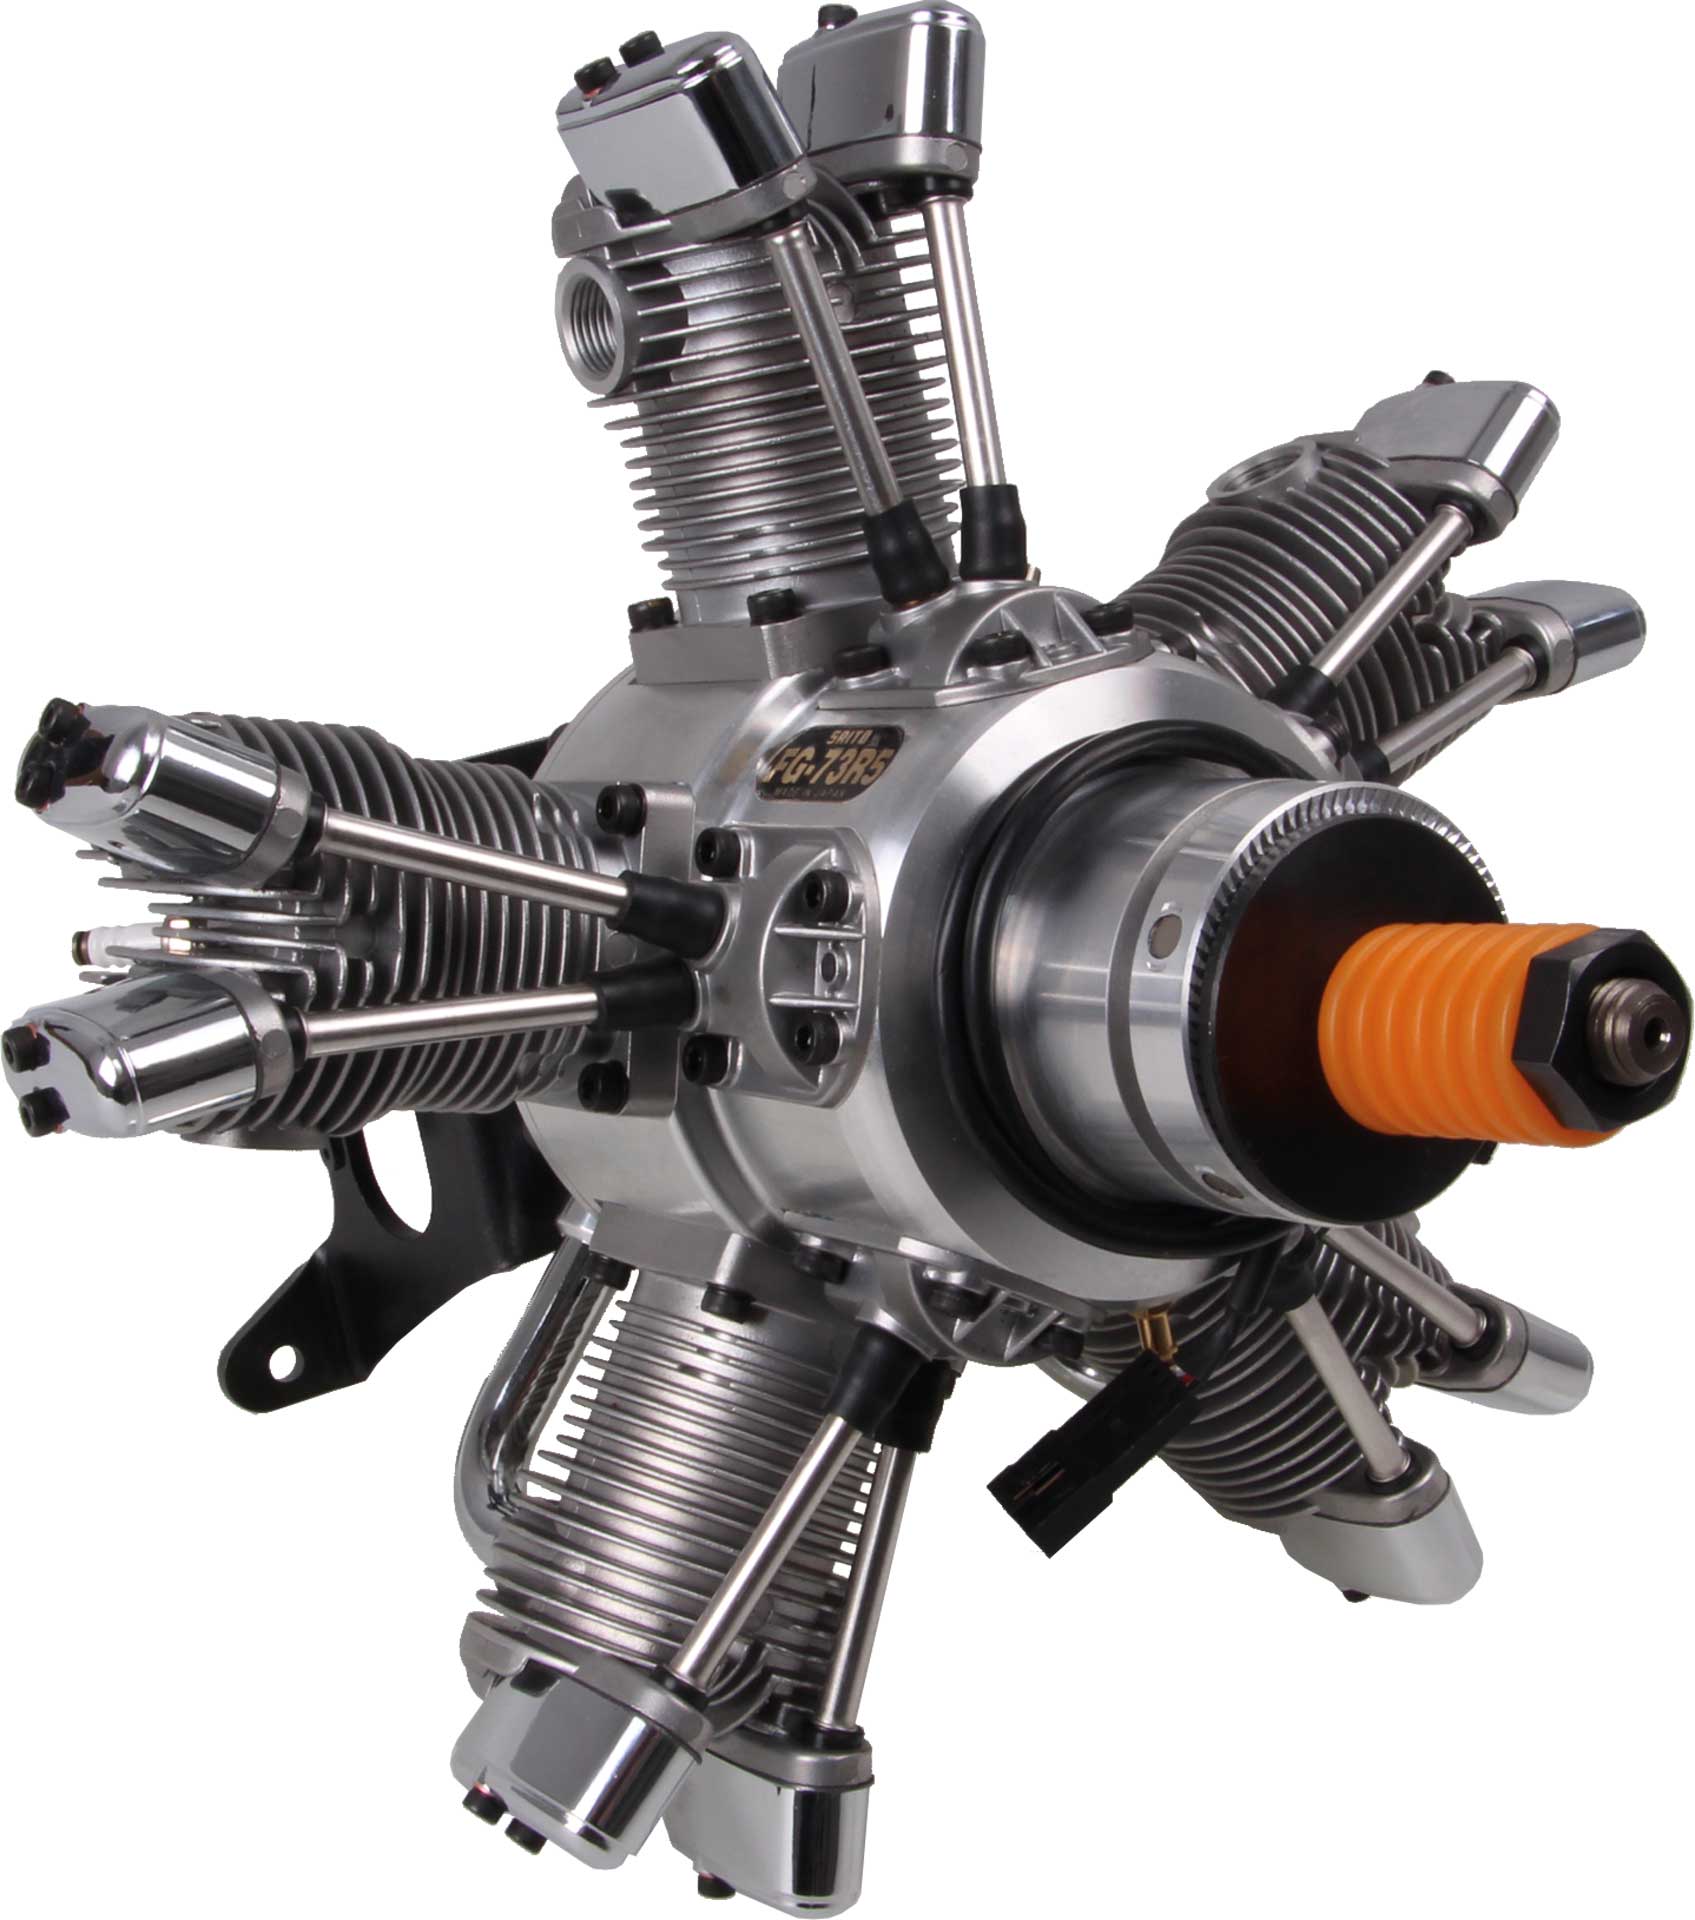 SAITO FG-73R5 gasoline radial engine 5-cylinder